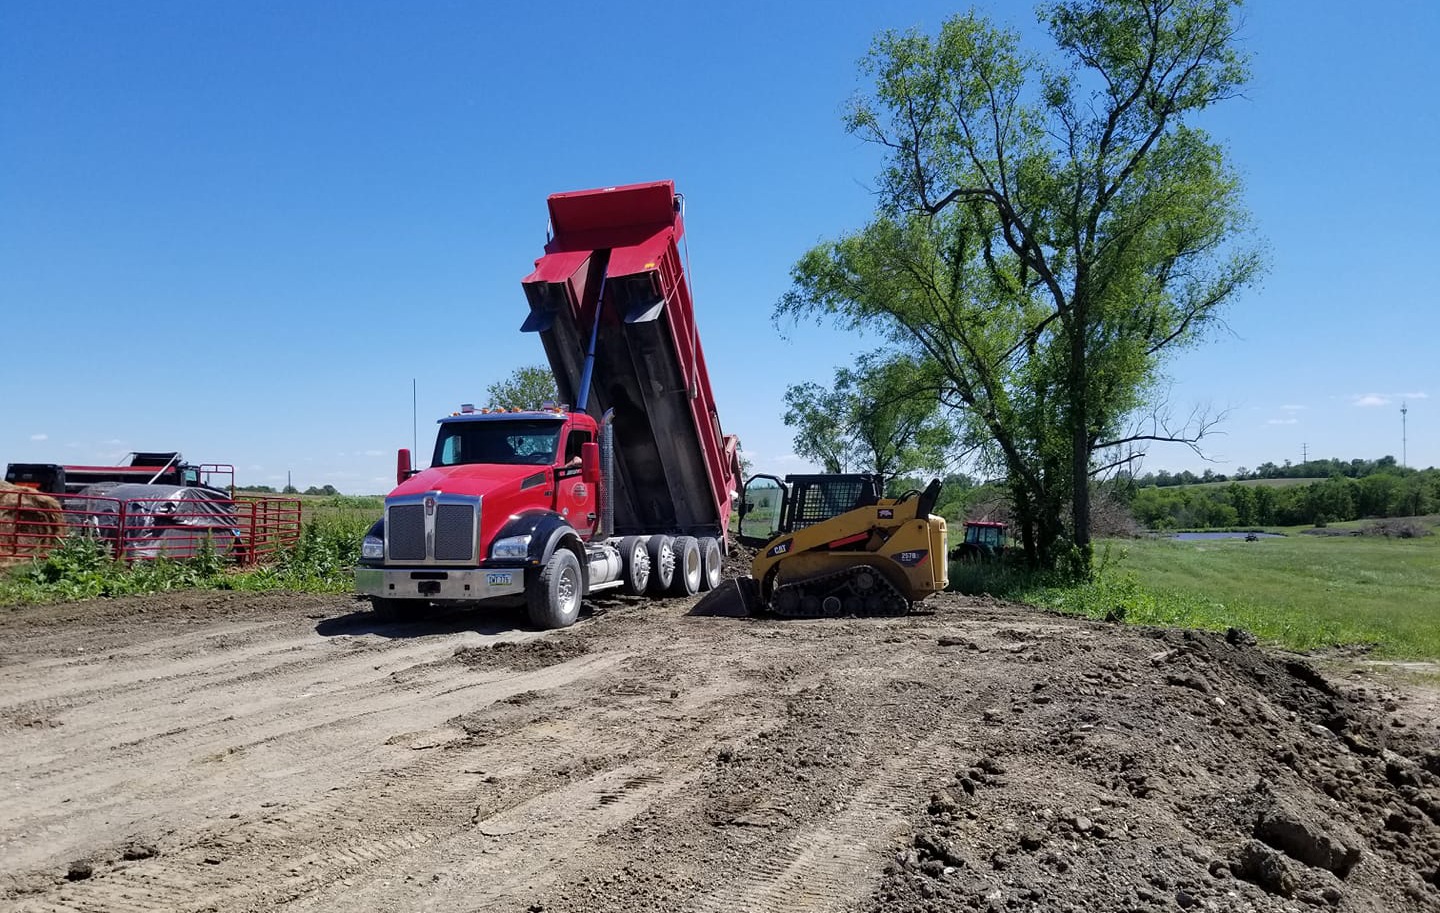 Dump truck and skid loader do excavation work